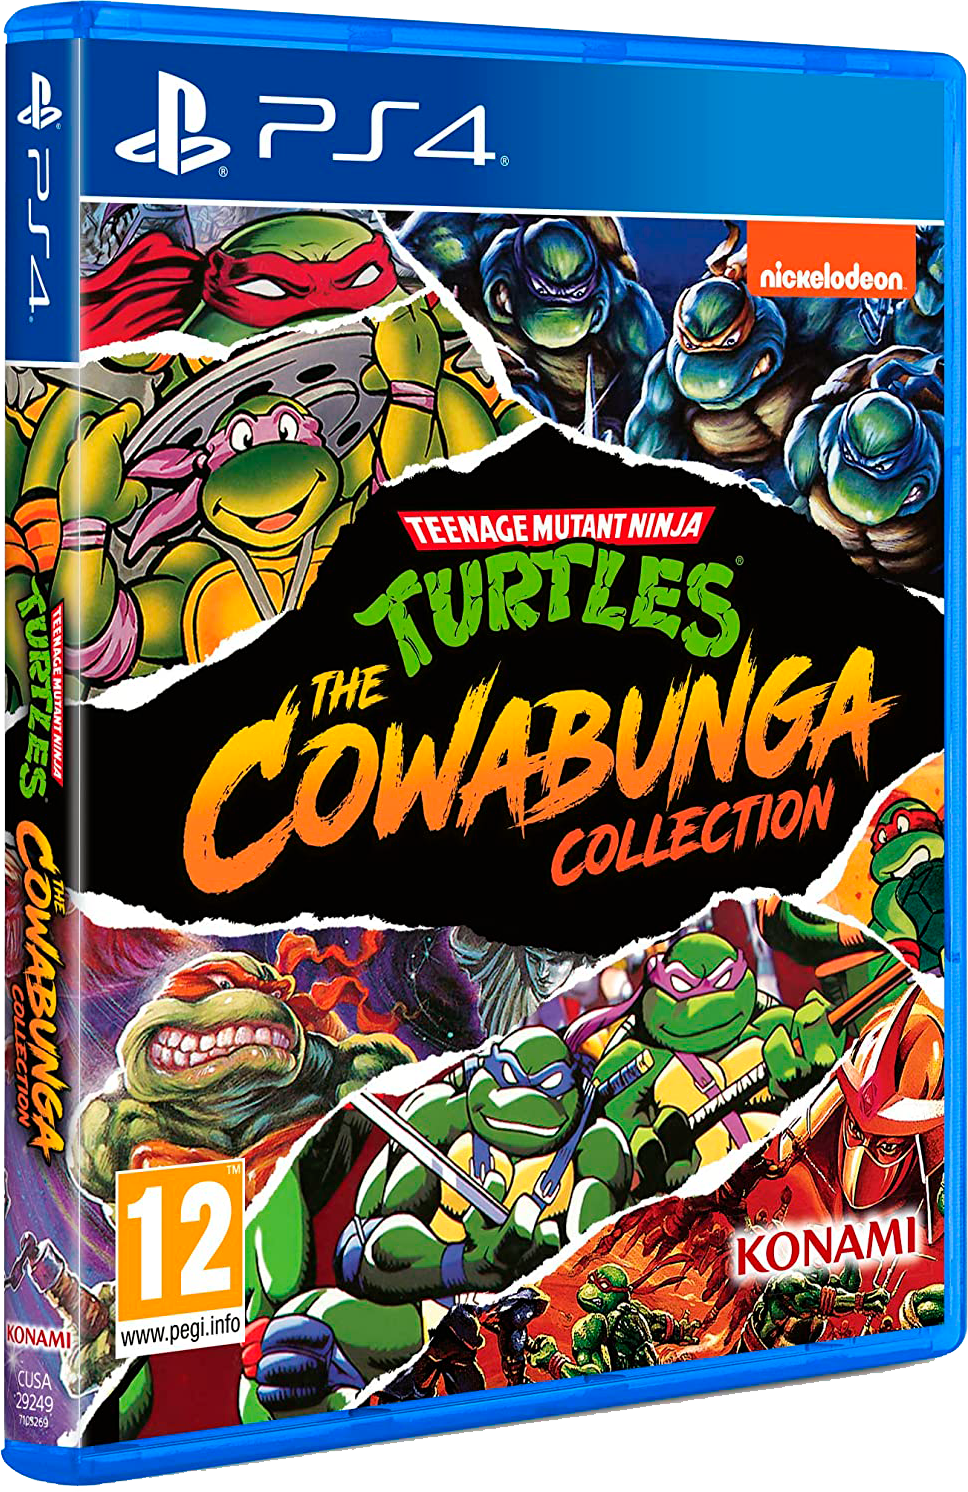 Черепашки ниндзя Cowabunga collection. Teenage Mutant Ninja Turtles: the Cowabunga. Teenage Mutant Ninja Turtles: the Cowabunga collection. Teenage Mutant Ninja Turtles ps4.